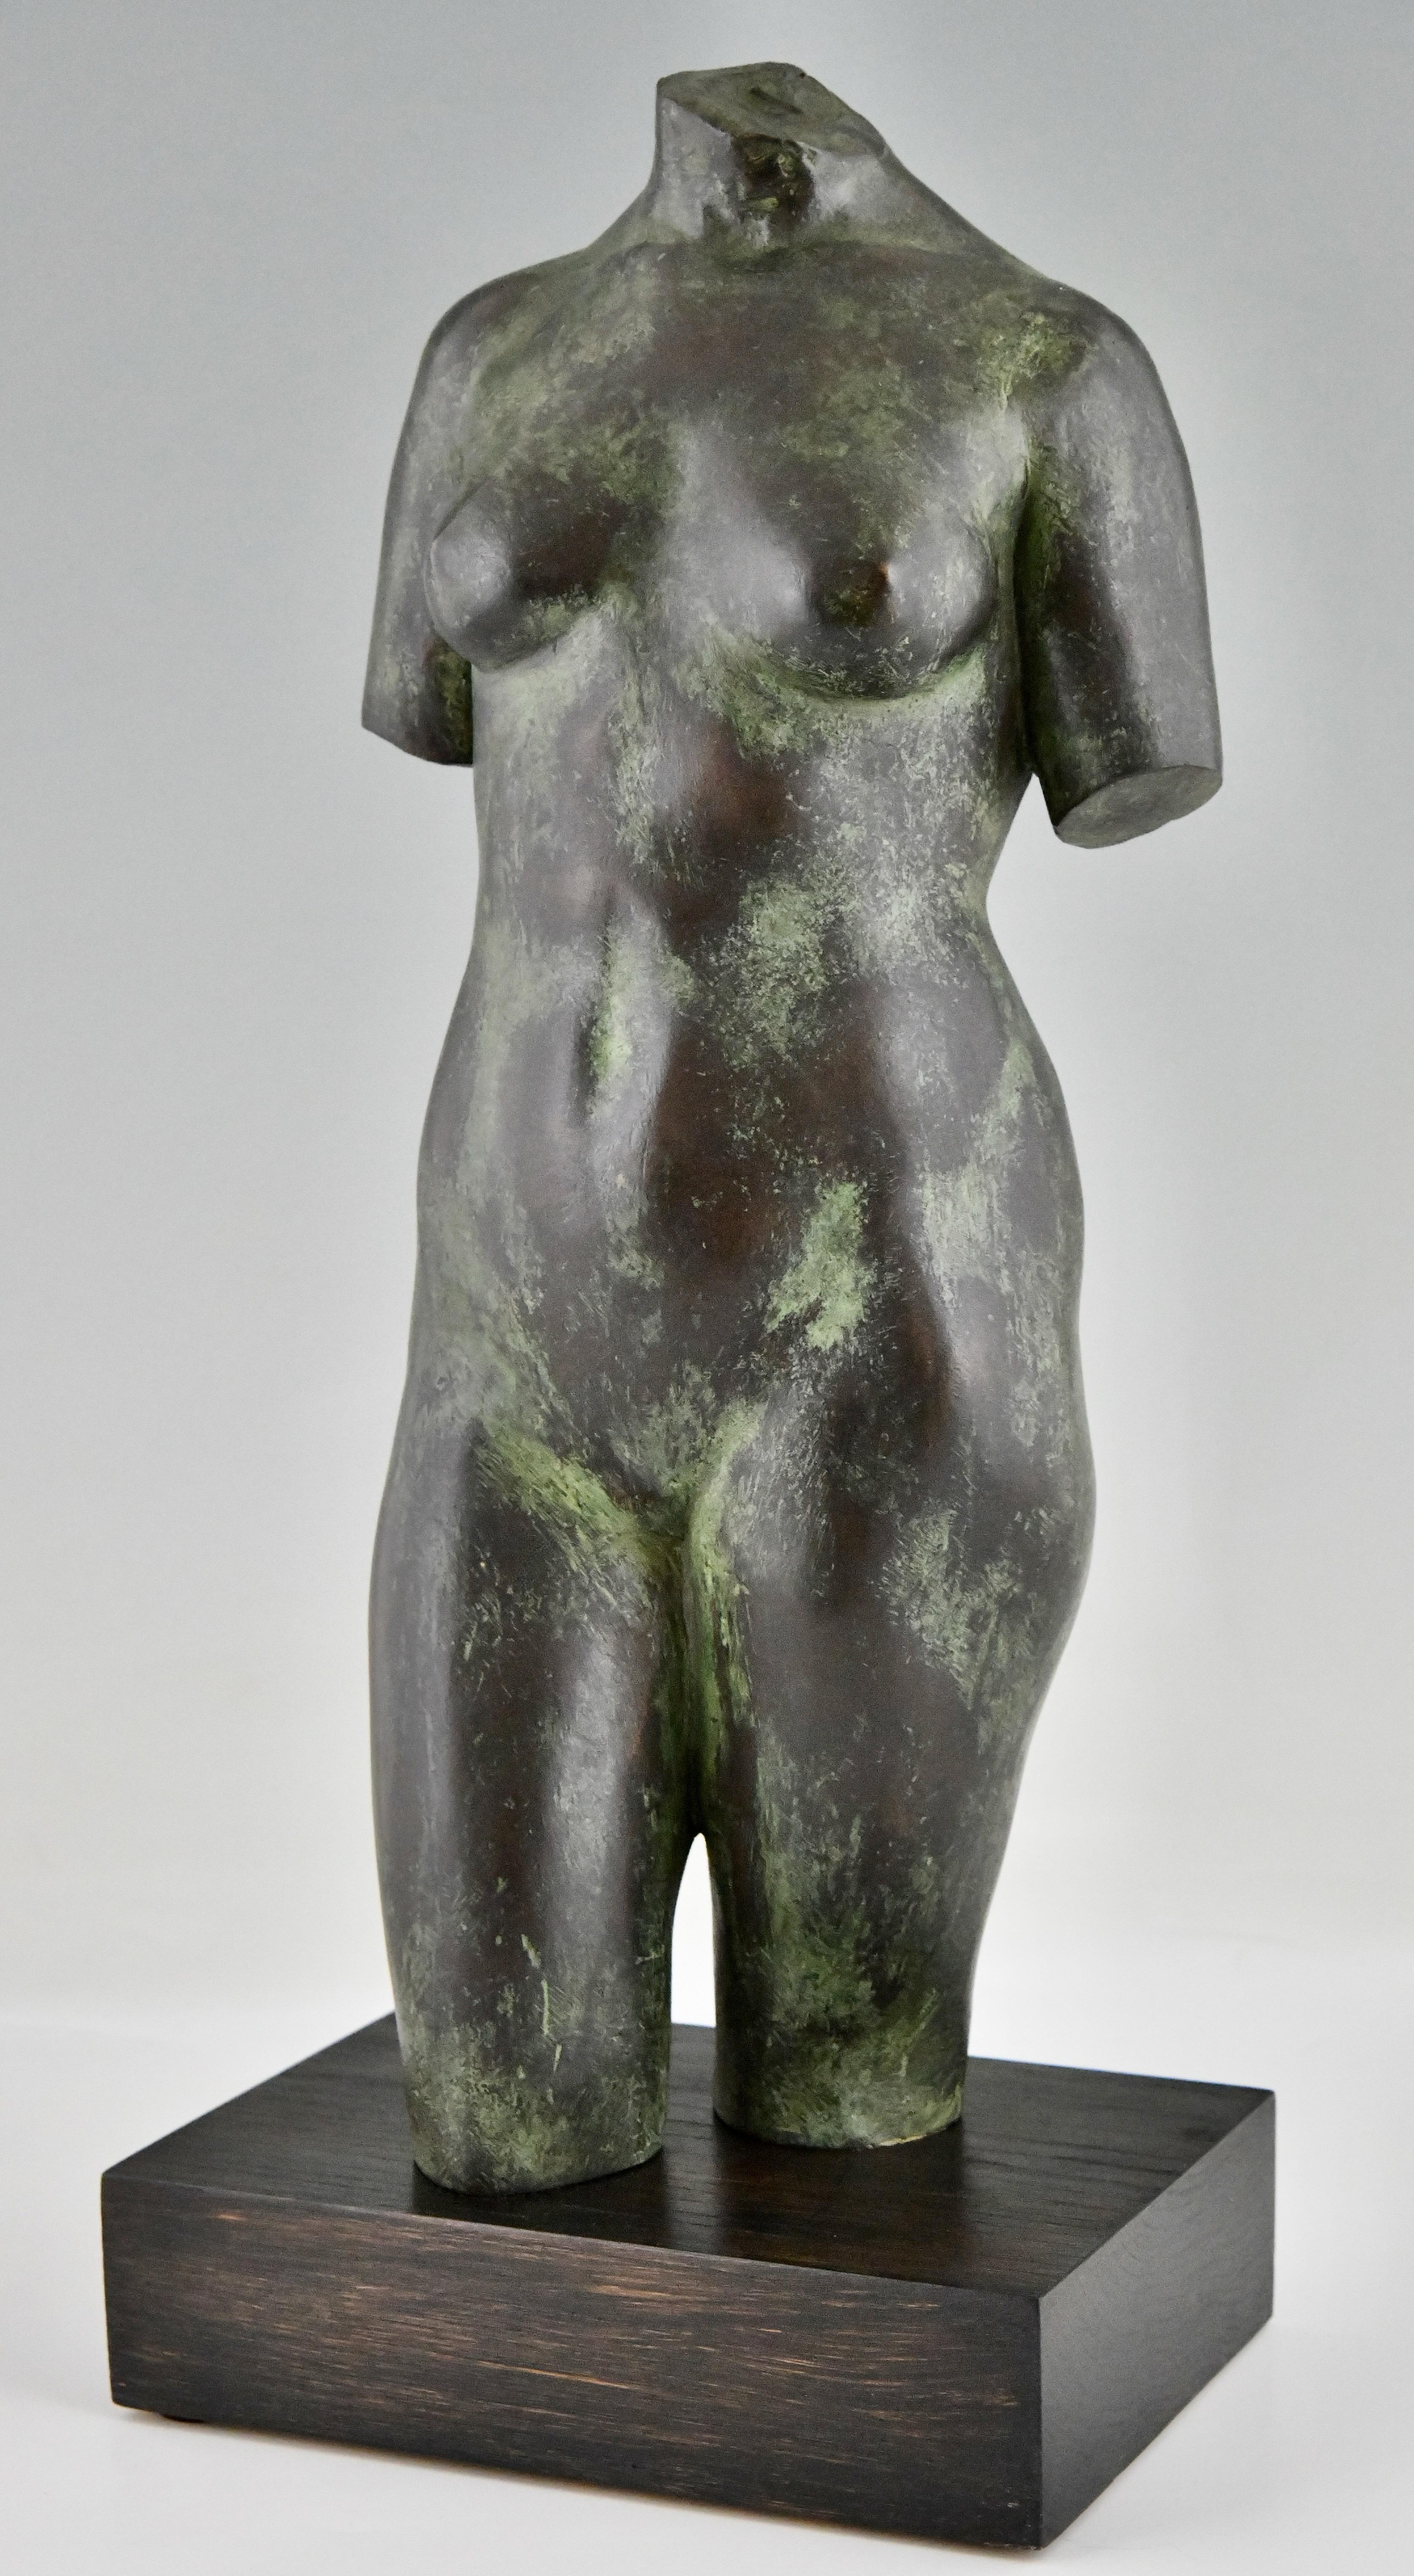 Midcentury bronze sculpture female torso by Fernando Bach Esteve (1929-1992).
Patinated bronze on a wooden base. 
Spain 1970. 
Literature: 
Fernando Bach Esteve i Massaneda, artista i mestre.